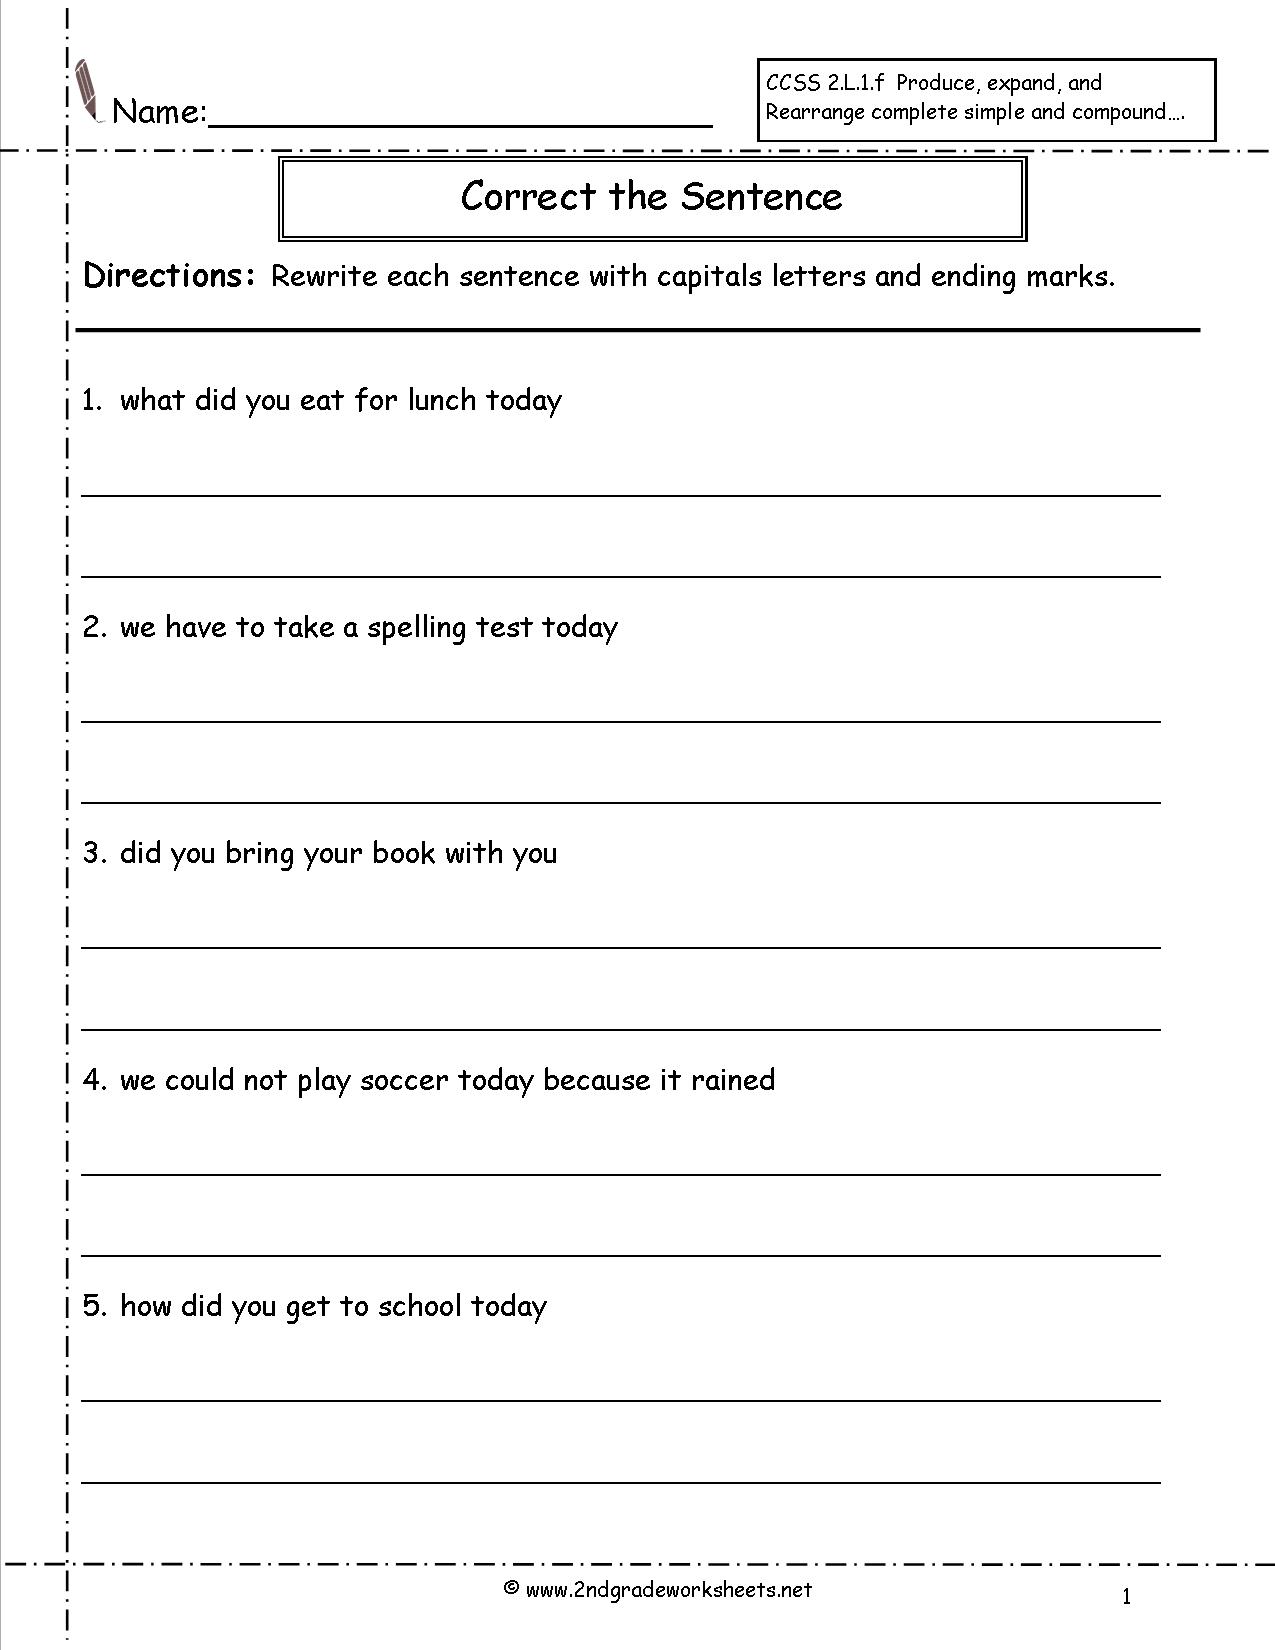 Unscramble Sentences Worksheets 2nd Grade Scrambled Sentences For 2nd Grade Worksheets Correct